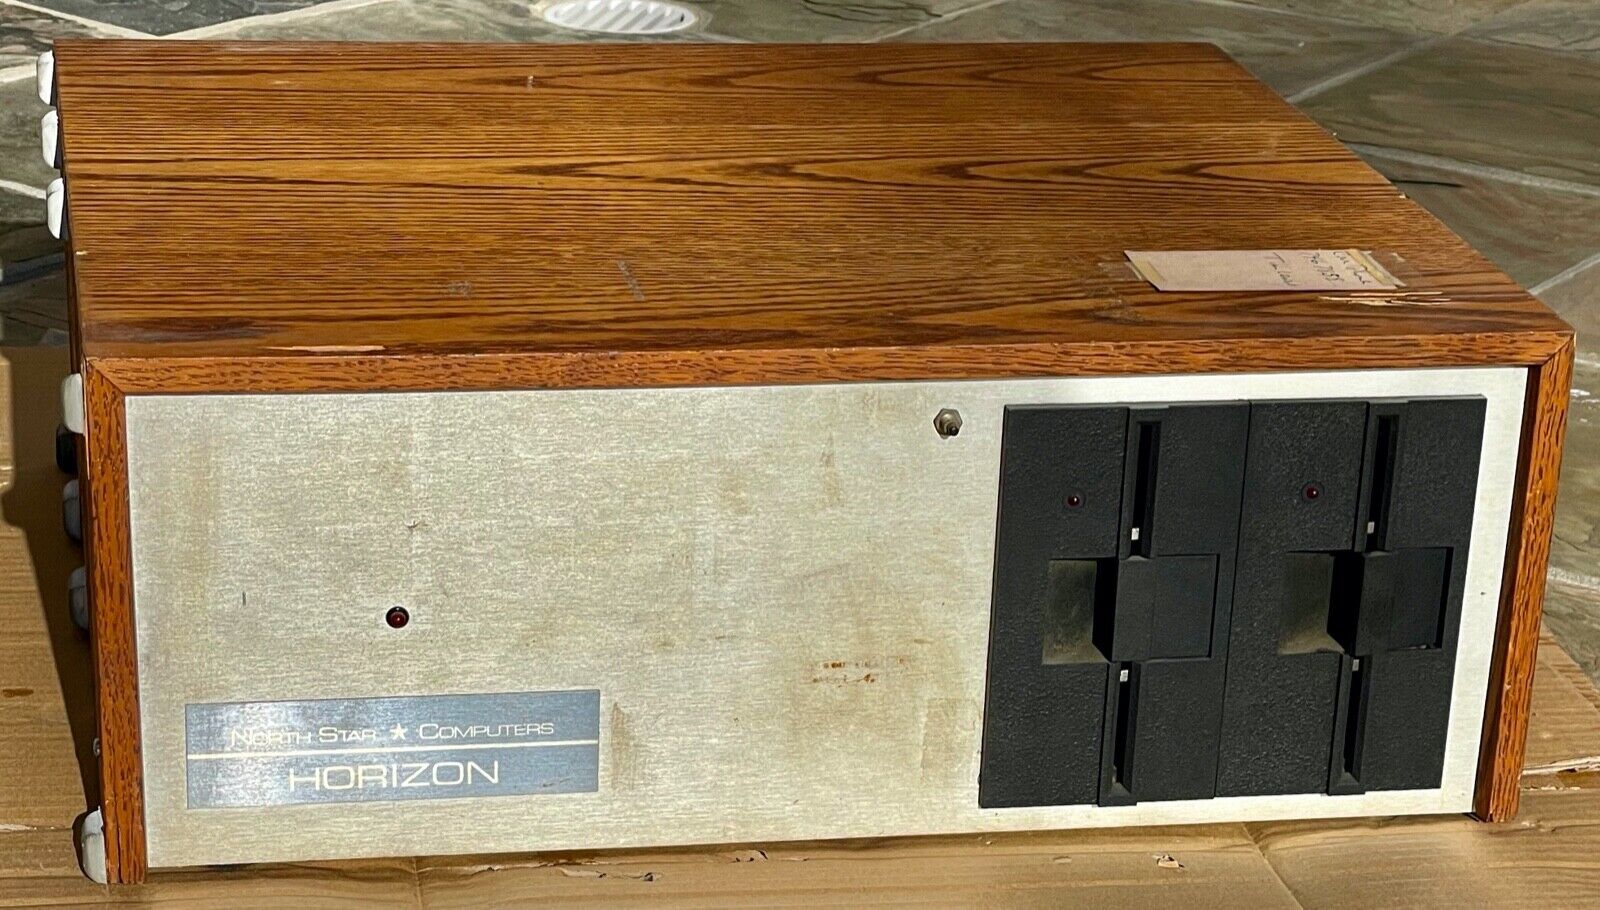 North Star Horizon Vintage S100 Computer Buy It Now $899